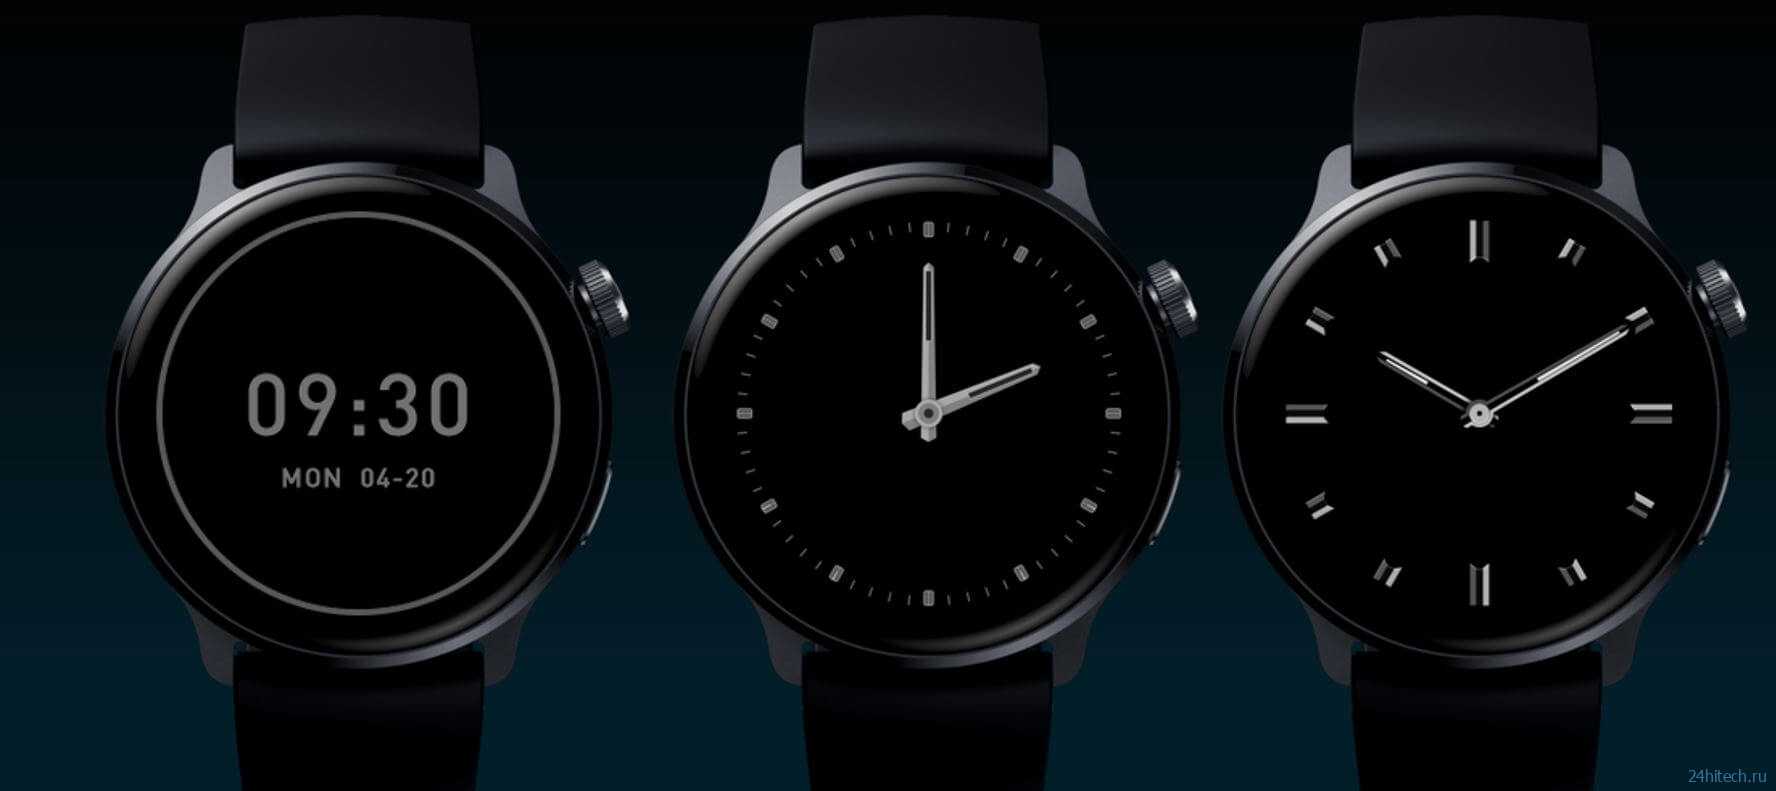 Samsung galaxy watch 4 против galaxy watch active 2: в чем различия? - ru atsit